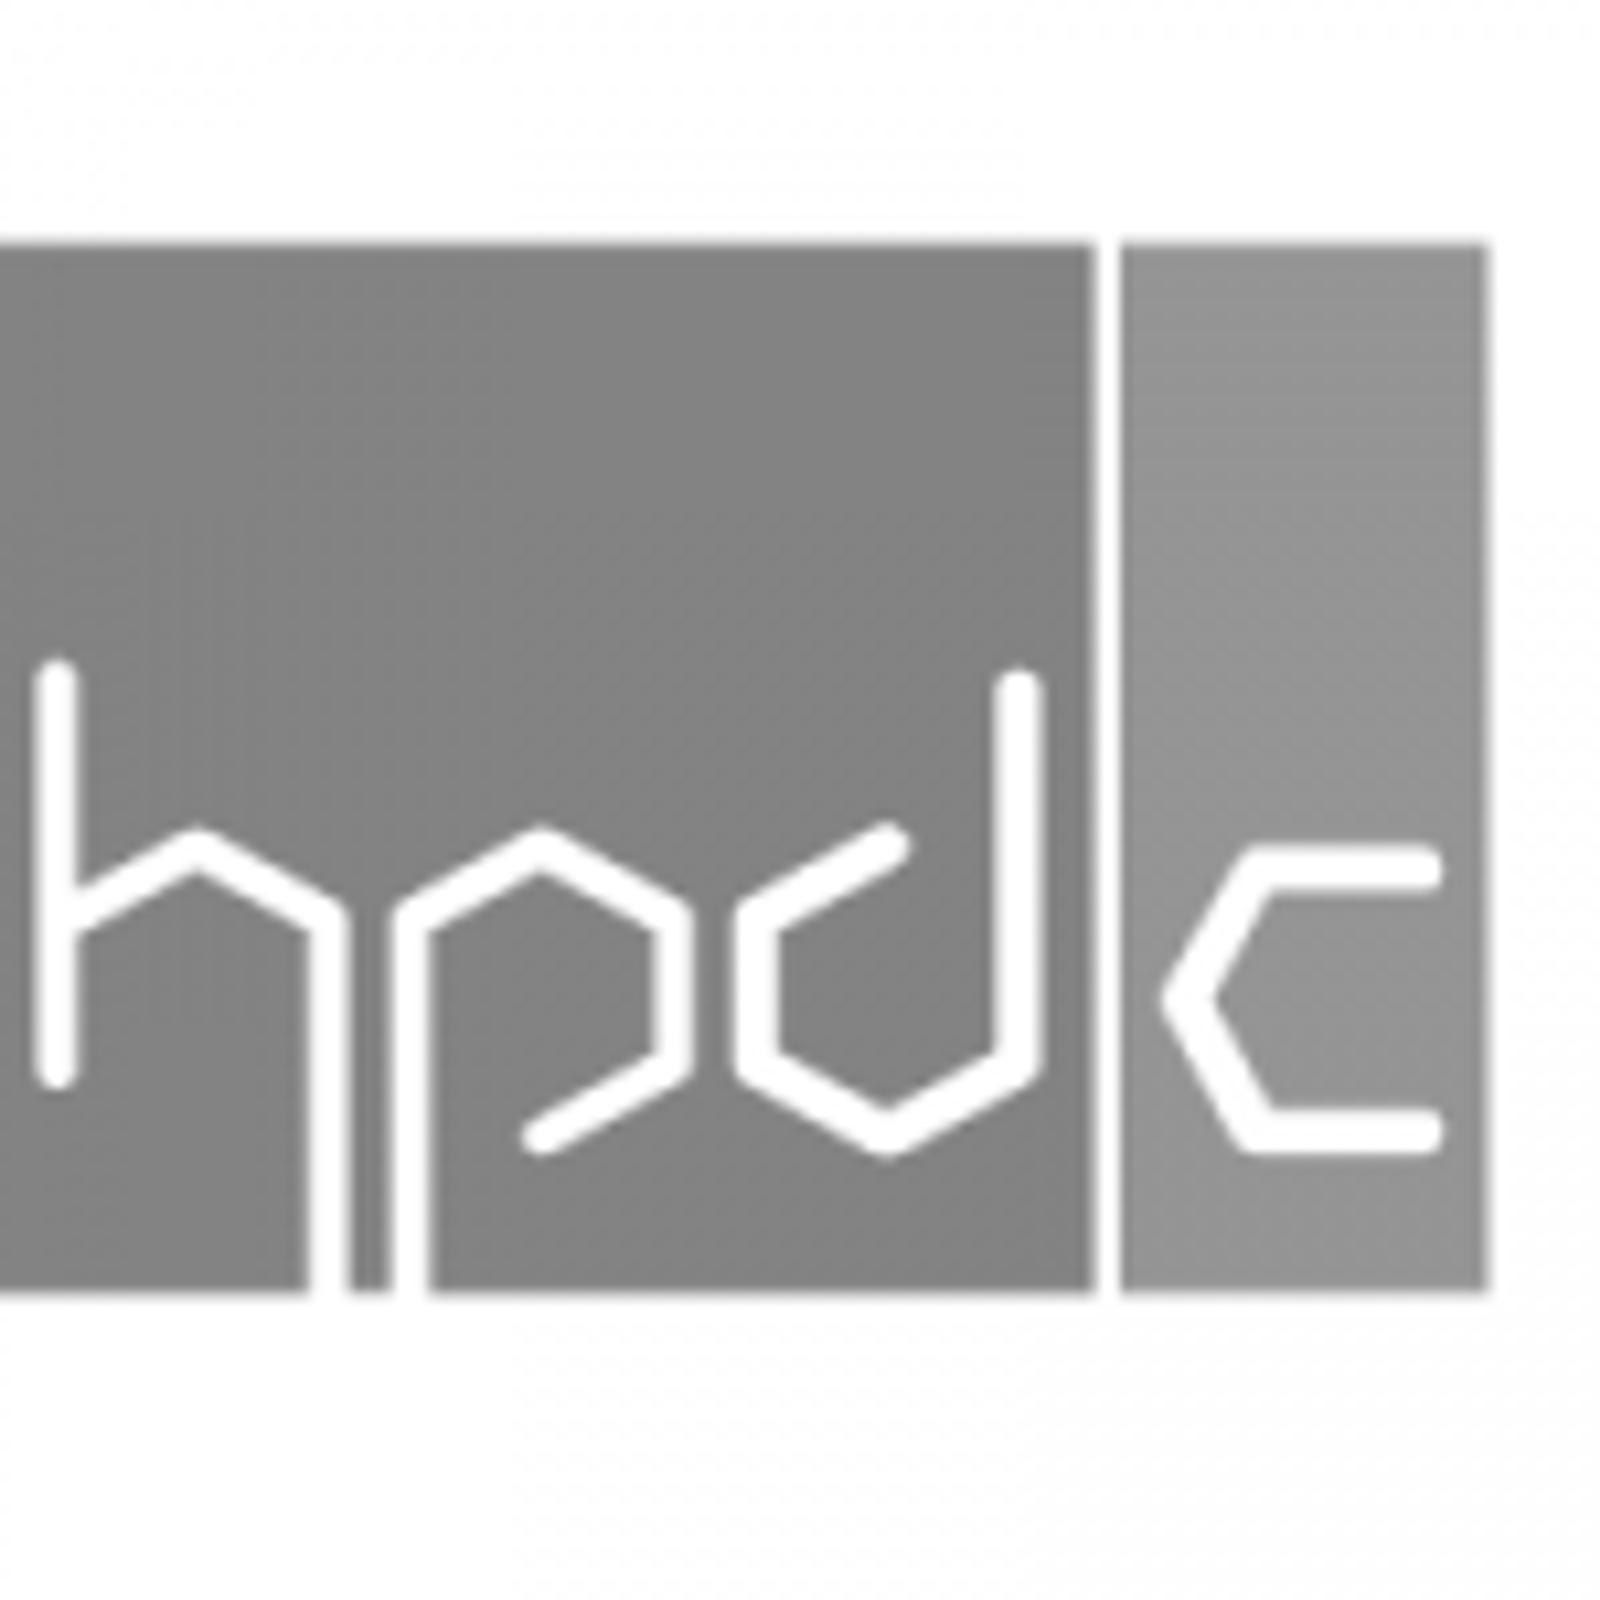 hpdc logo